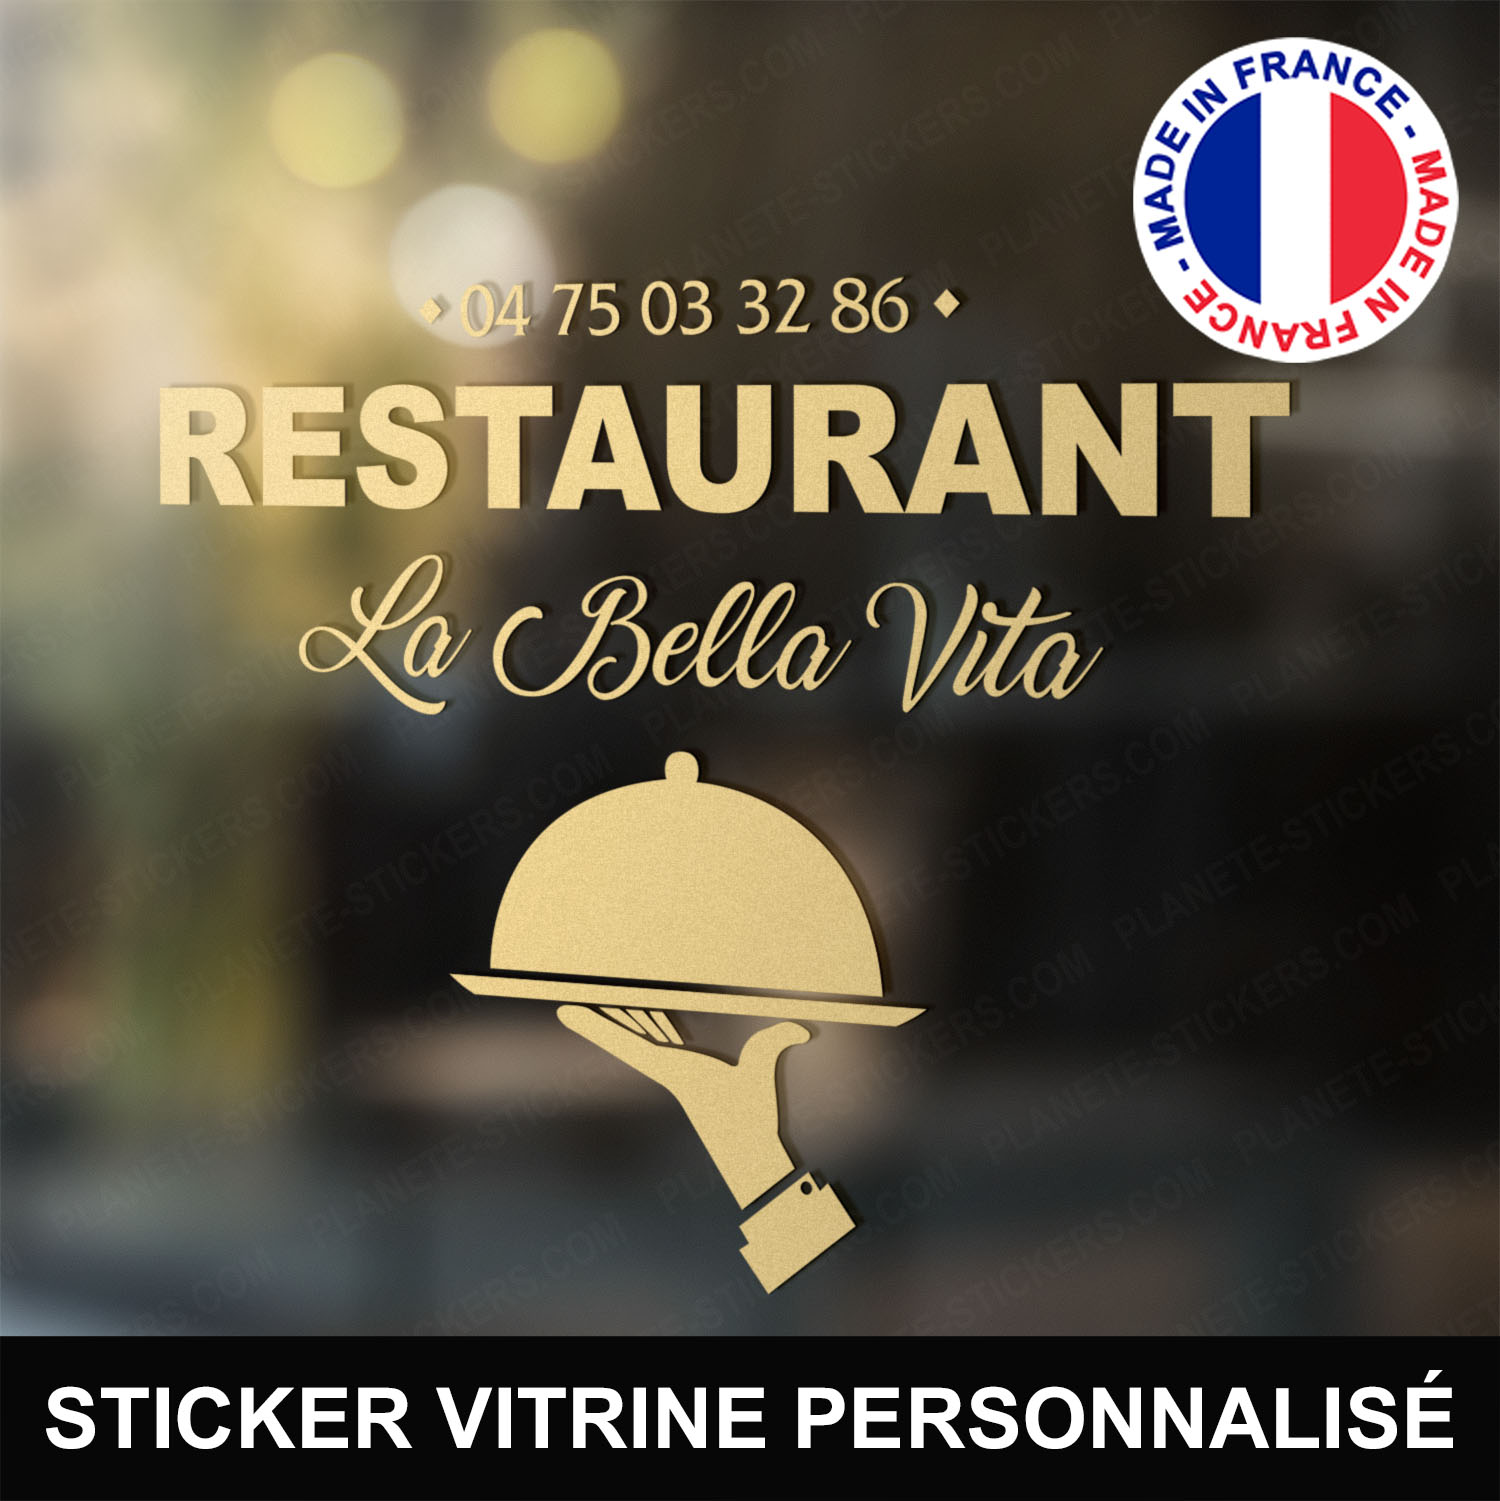 ref7restaurantvitrine-stickers-restaurant-vitrine-restaurant-sticker-personnalisé-autocollant-pro-restaurateur-vitre-resto-professionnel-logo-serveur